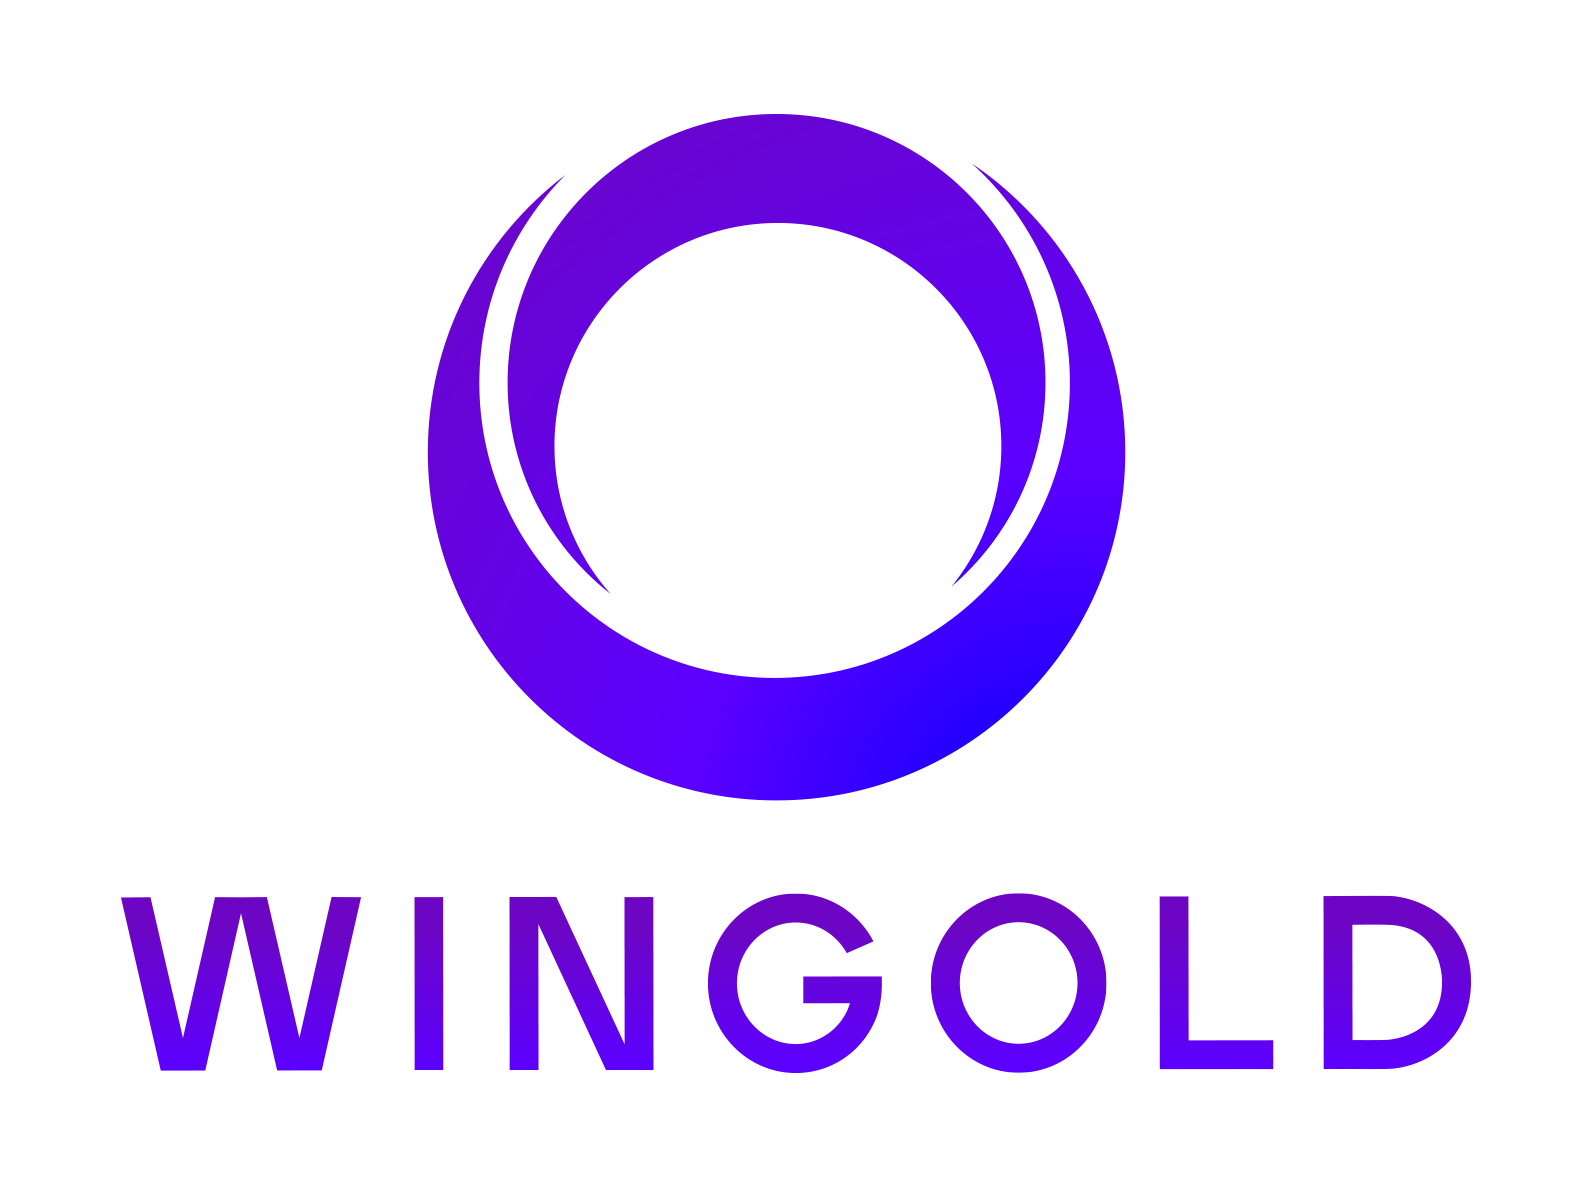 Tradewind supports silver on blockchain platform - Ledger Insights